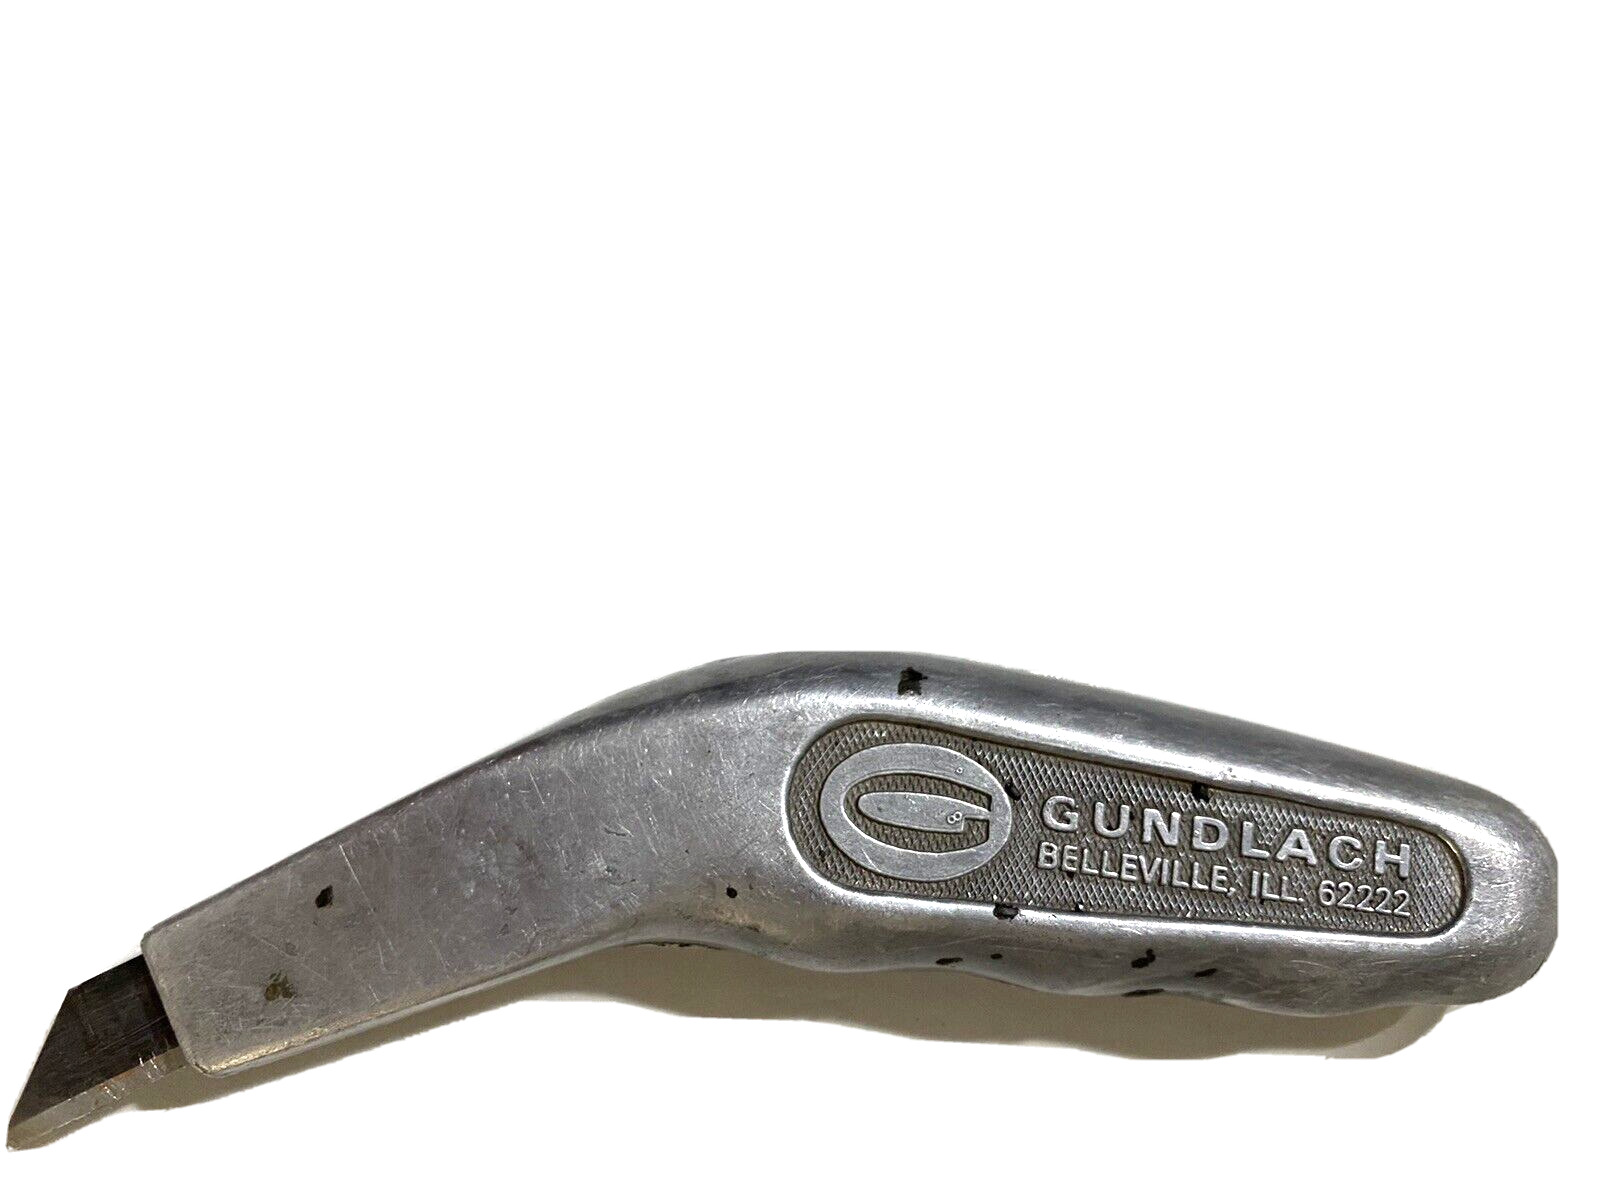 Vintage Gundlach No. 6 Airway Flooring Knife W/ Extra Blades, Usa